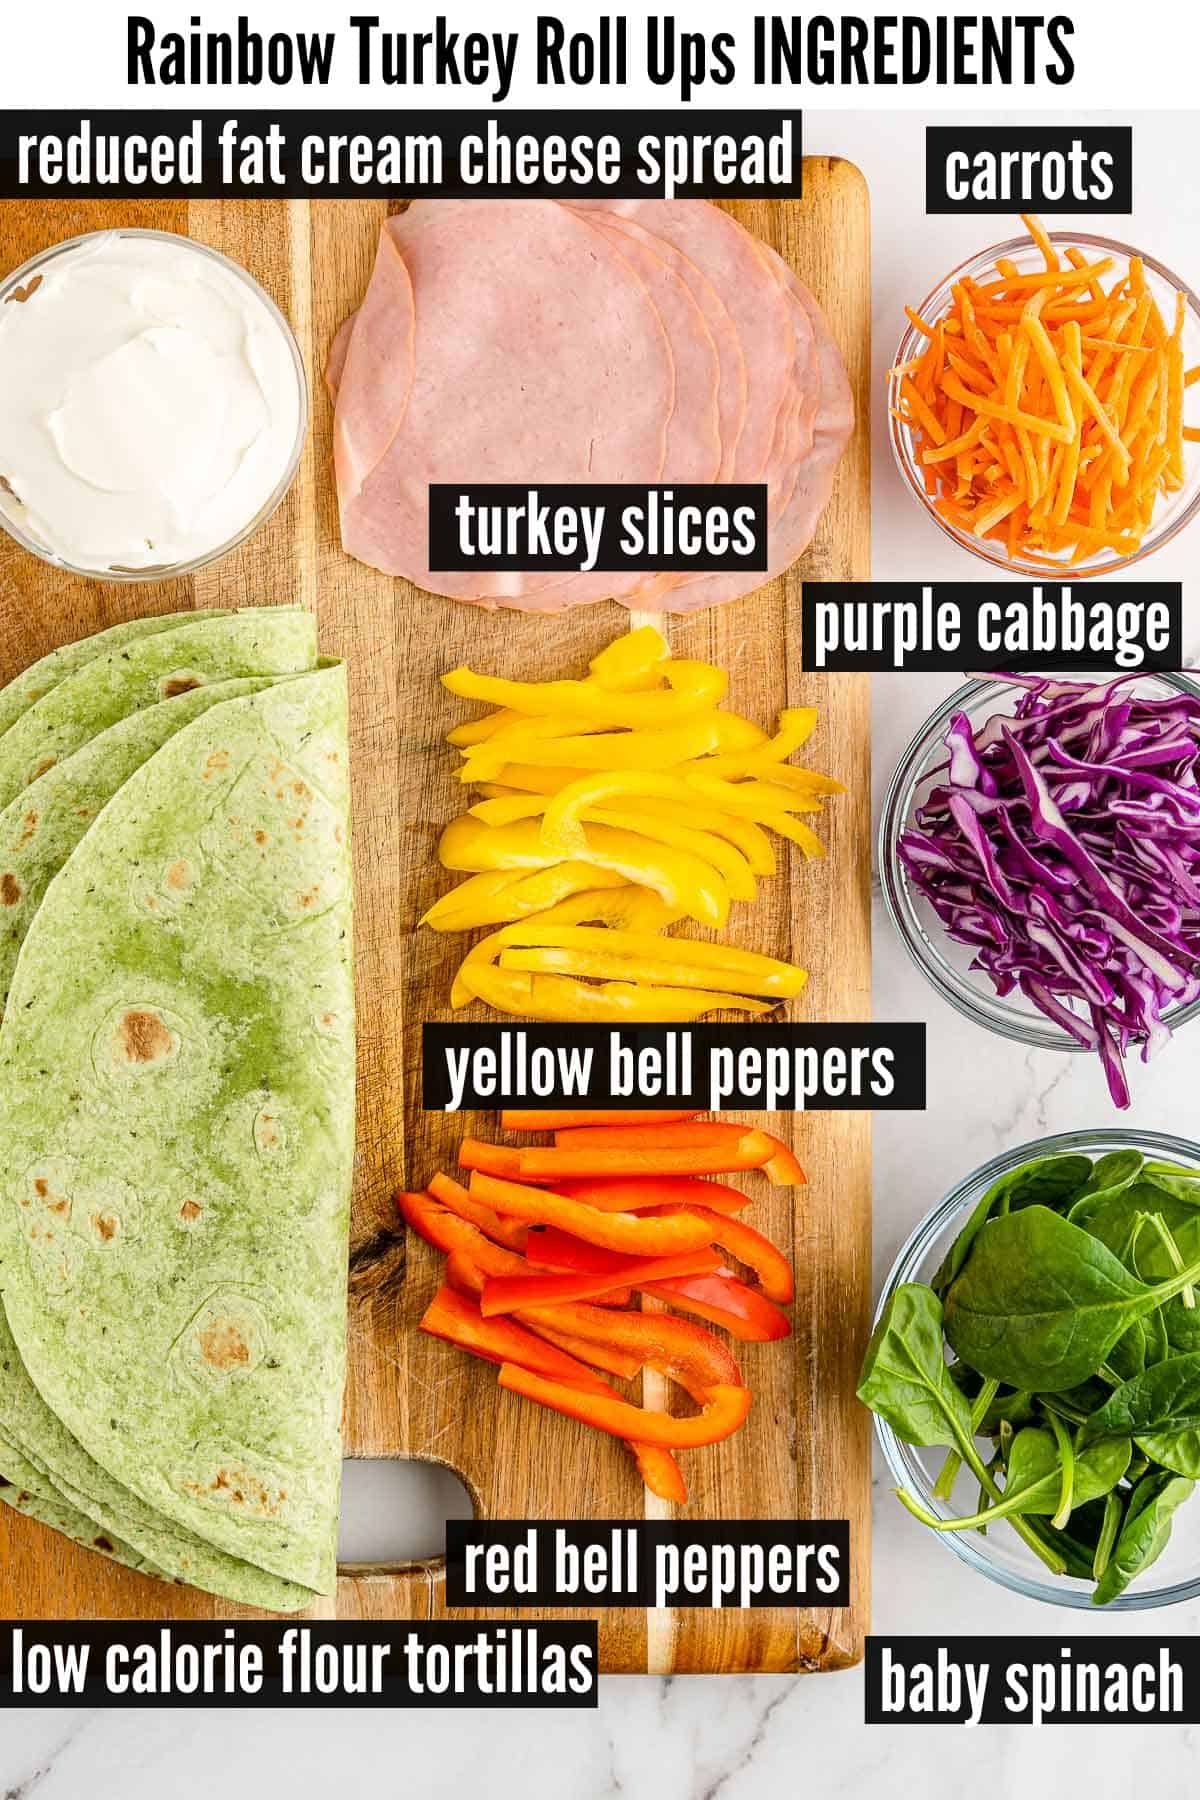 rainbow turkey roll ups labelled ingredients.